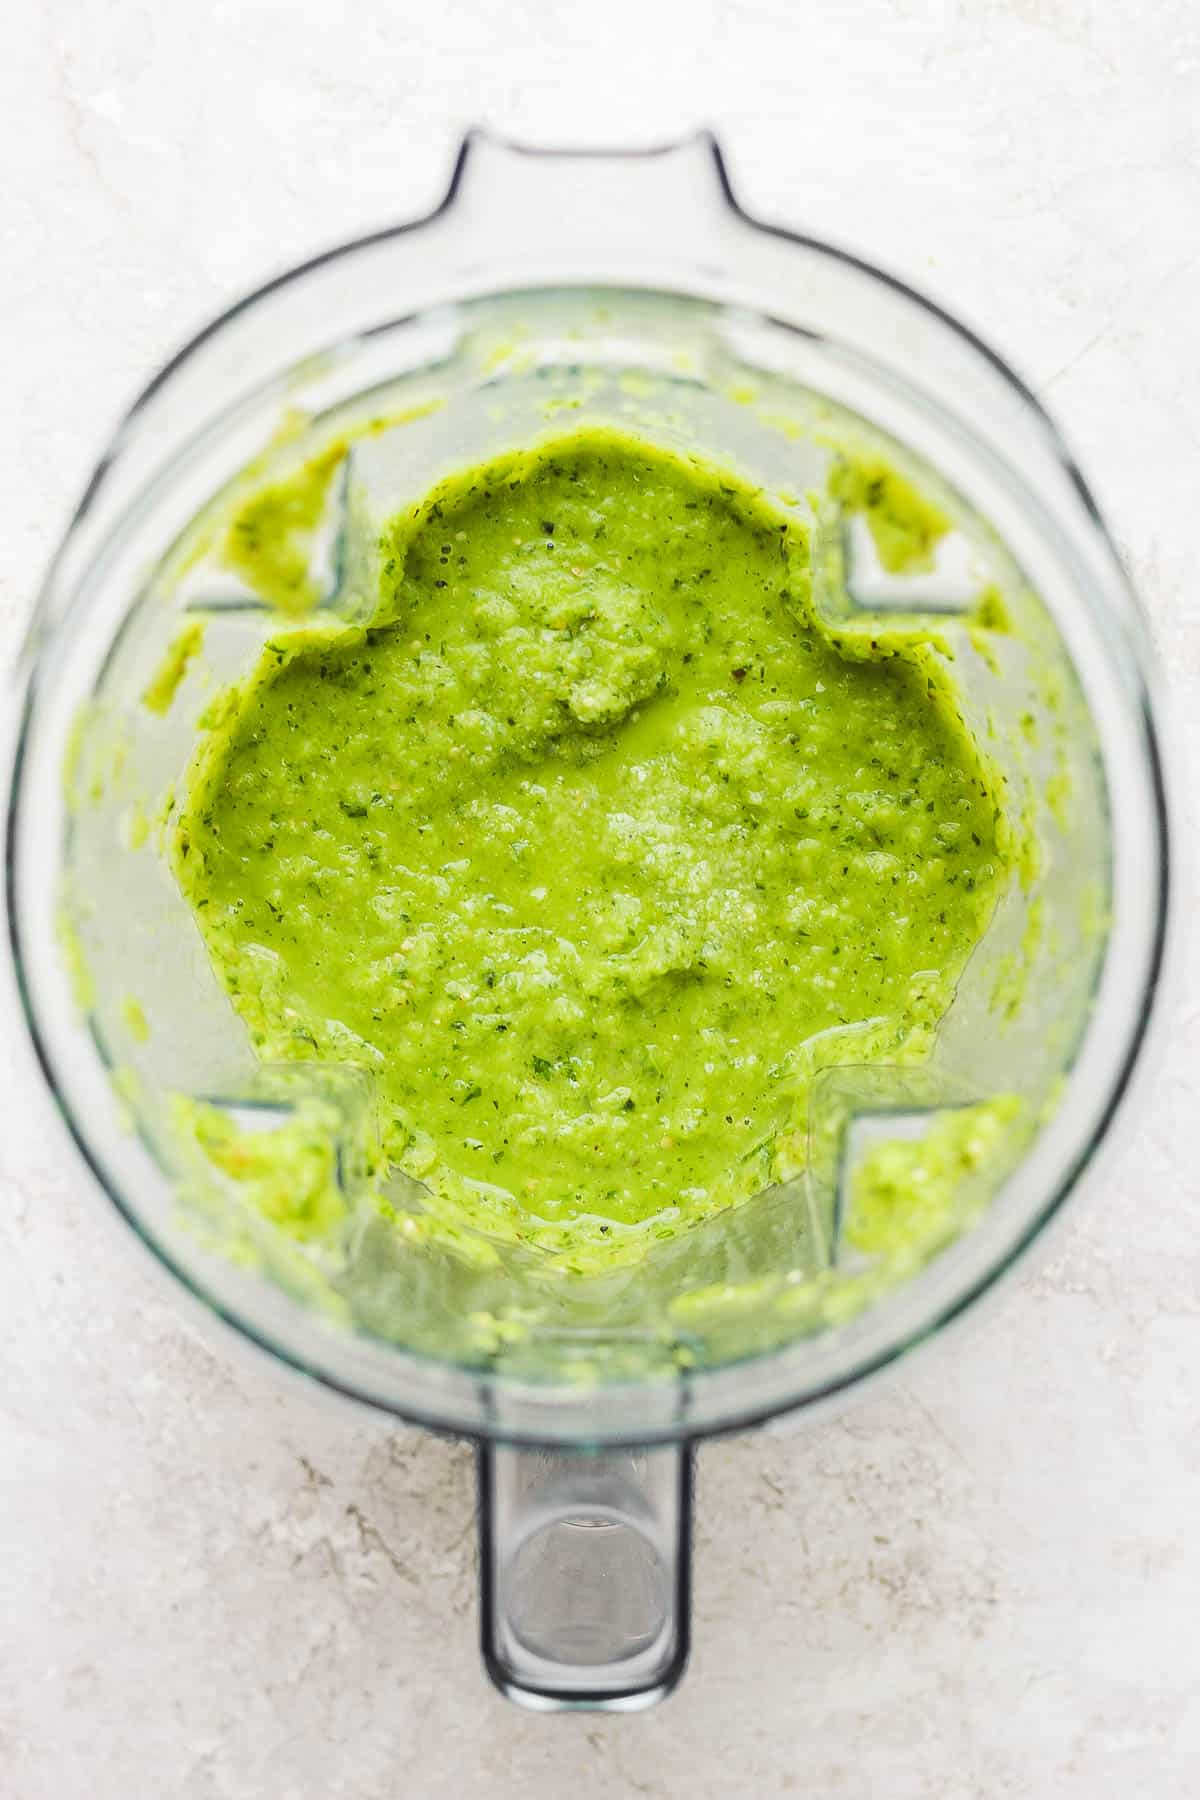 Fully blended salsa verde in a blender.